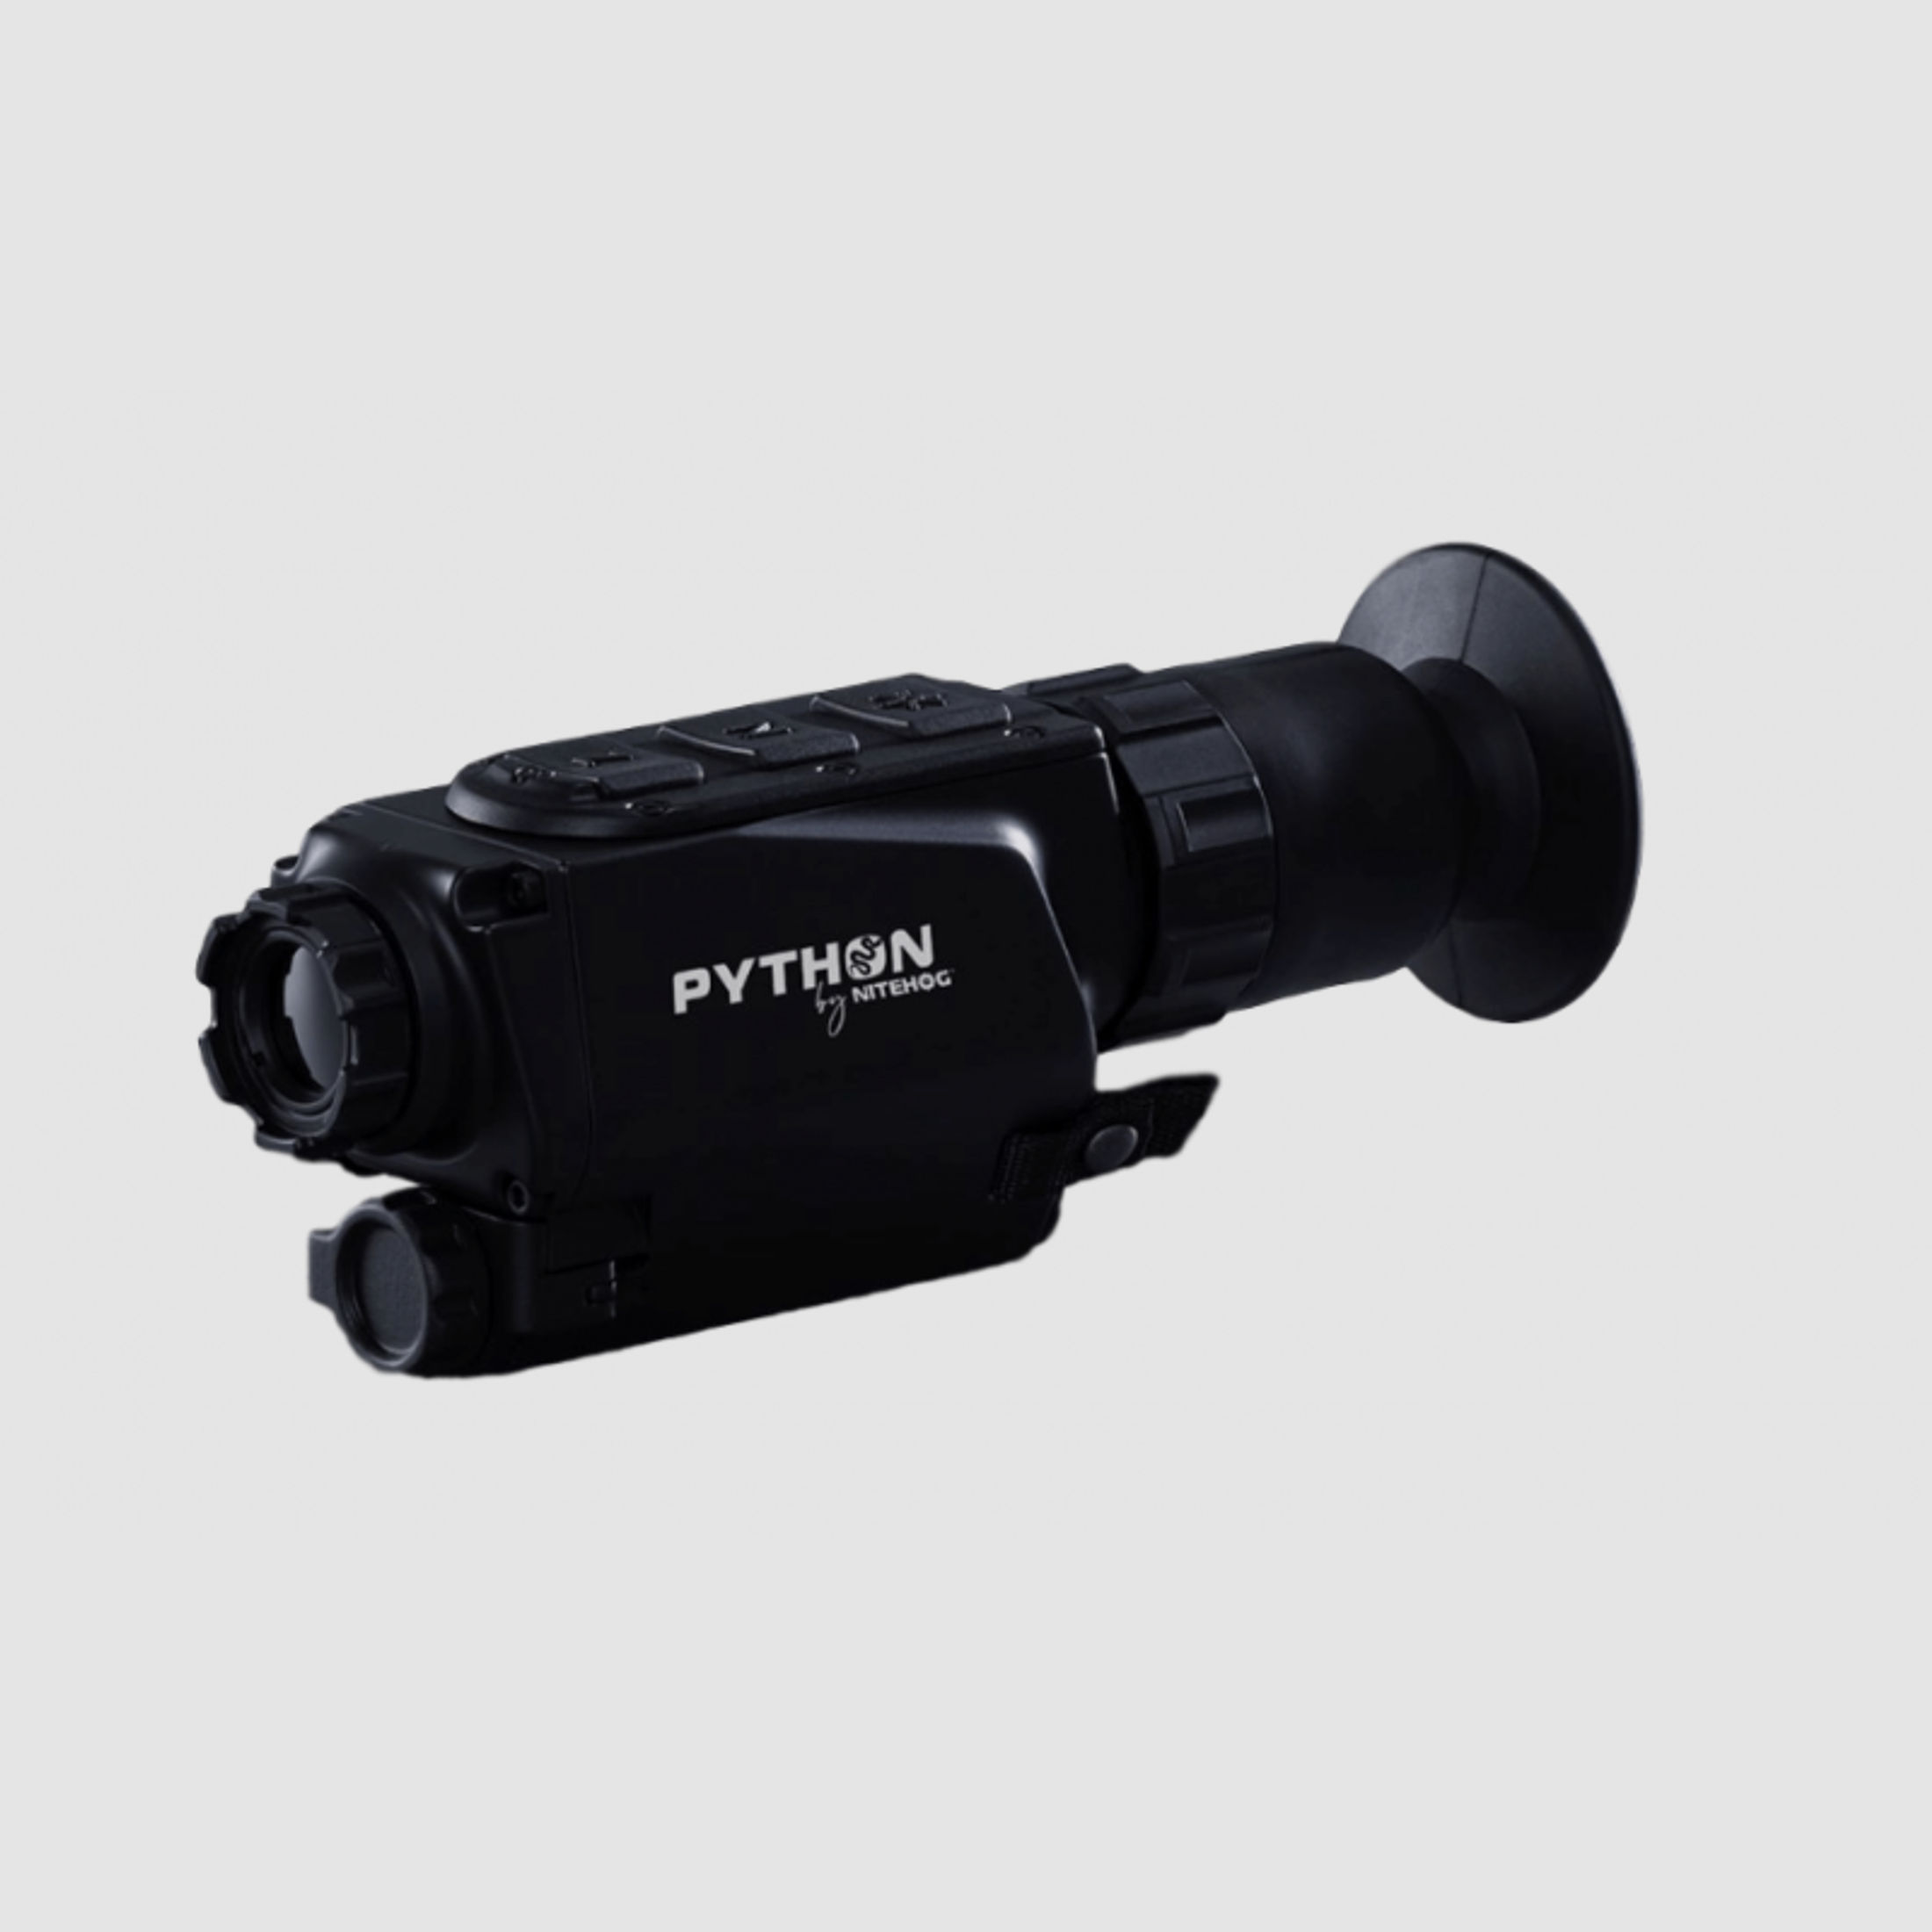 Nitehog TIR-V19 AC Python Wärmebildkamera / Infrarot Kamera